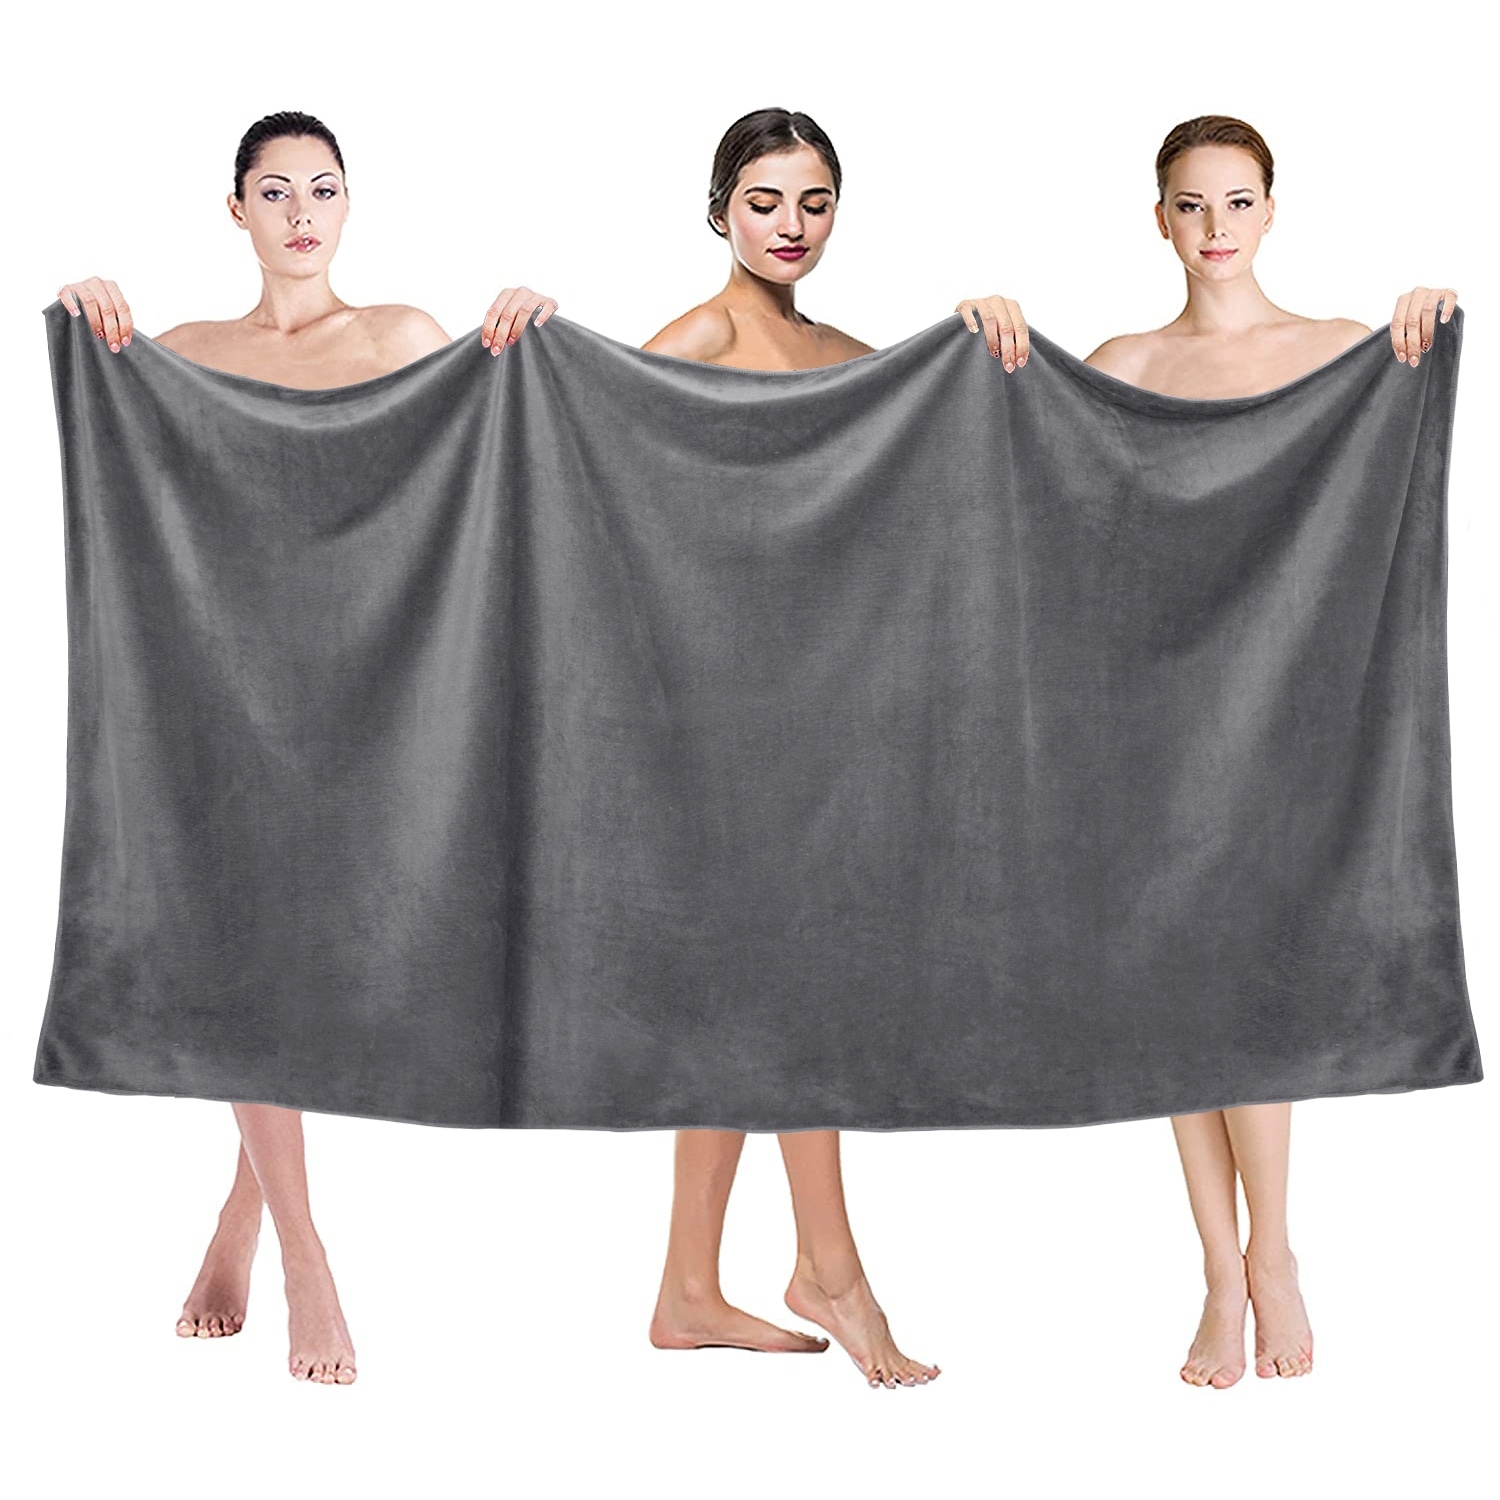 Jumbo Bath Sheets Towels For Adults 35 x 70 - 2-Pack - 100% Cotton Bath  Sheet Set - Extra Large Oversized Bath Towels - Absorbent Bath Towel Set 